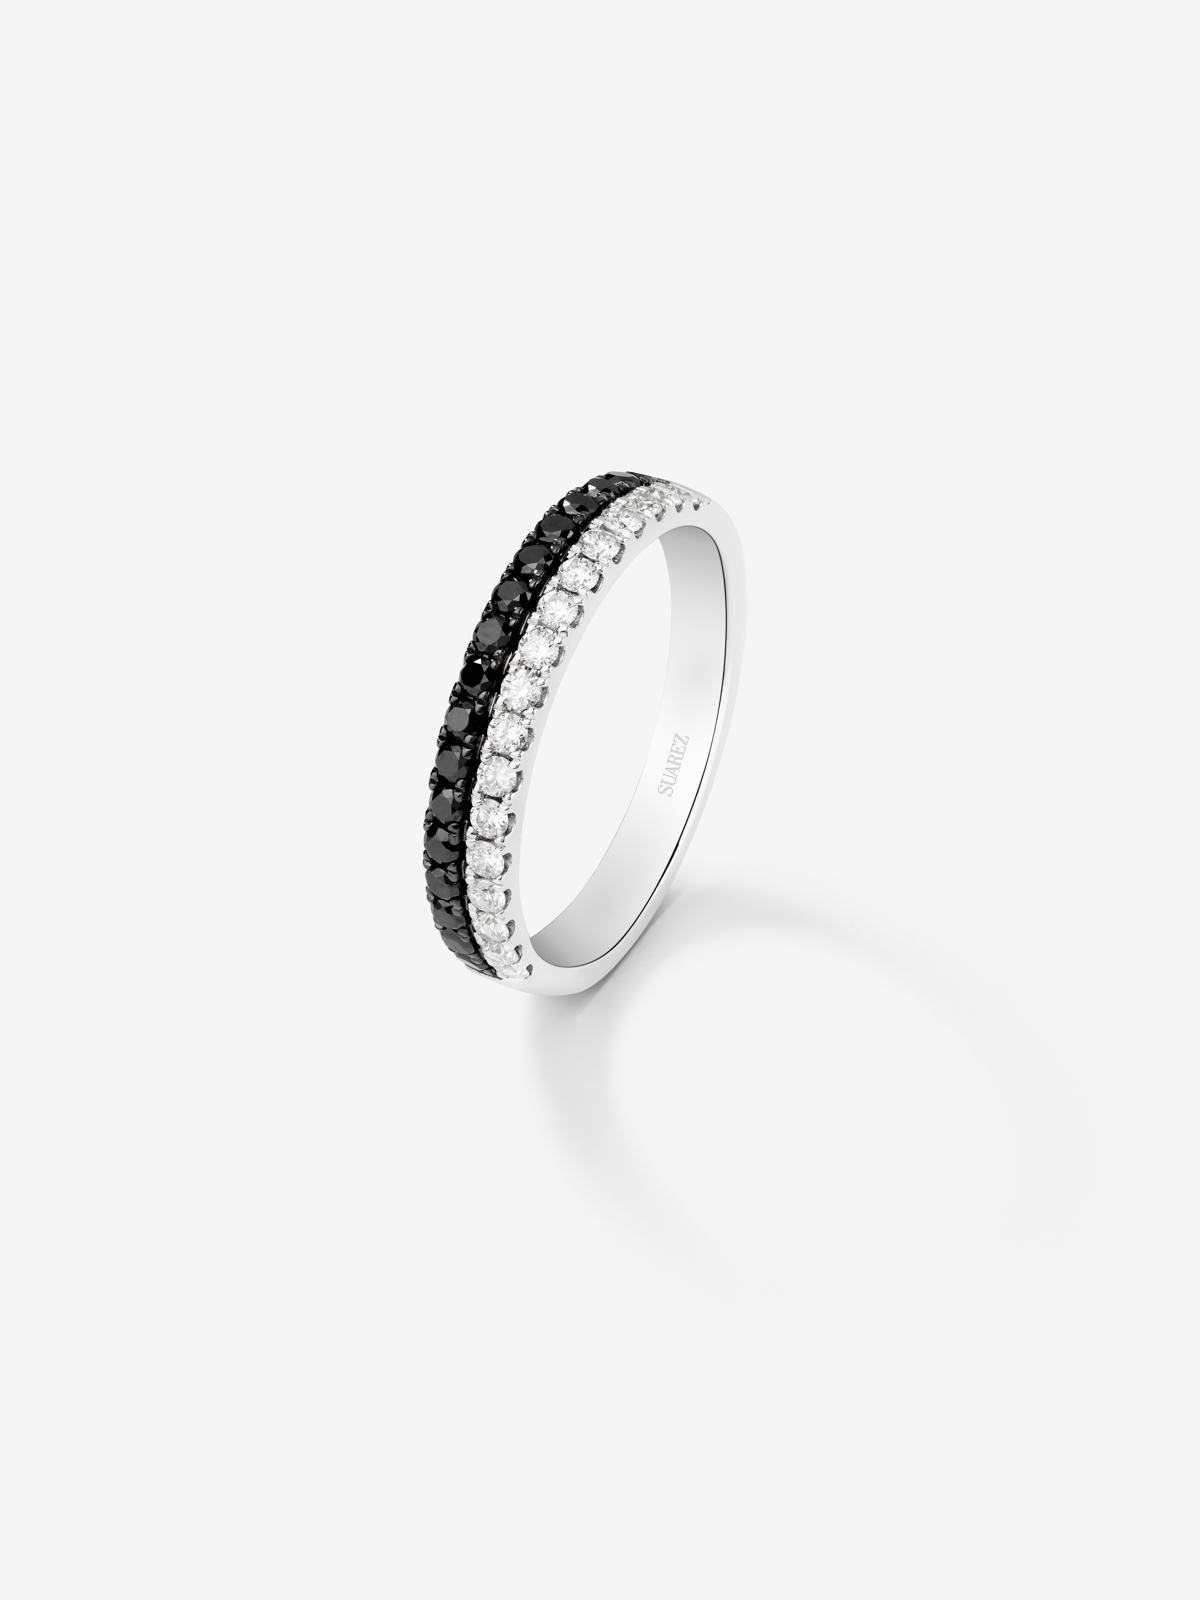 Half-eternity 18K white gold ring with black diamond and white diamond